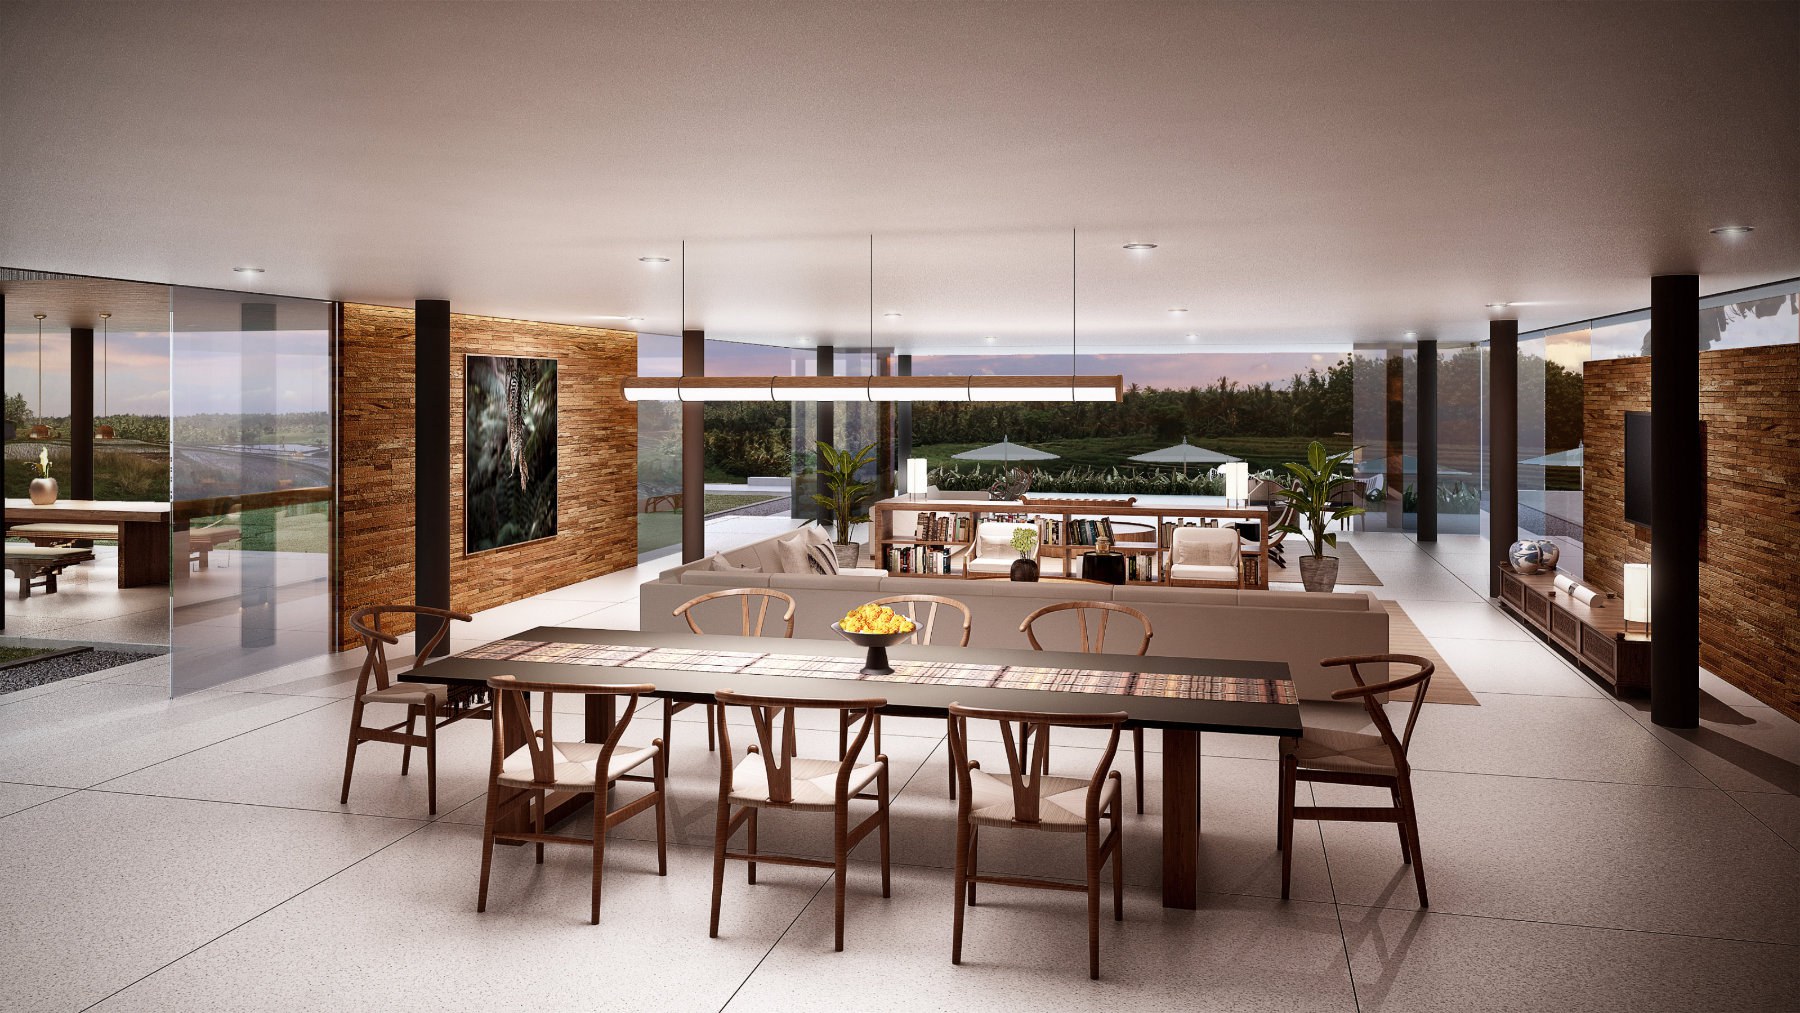 Design Assembly - Kedara House - Bali Architect - Interior Design - Bali Villa - Wooden Facade - Dining Area - Living Room